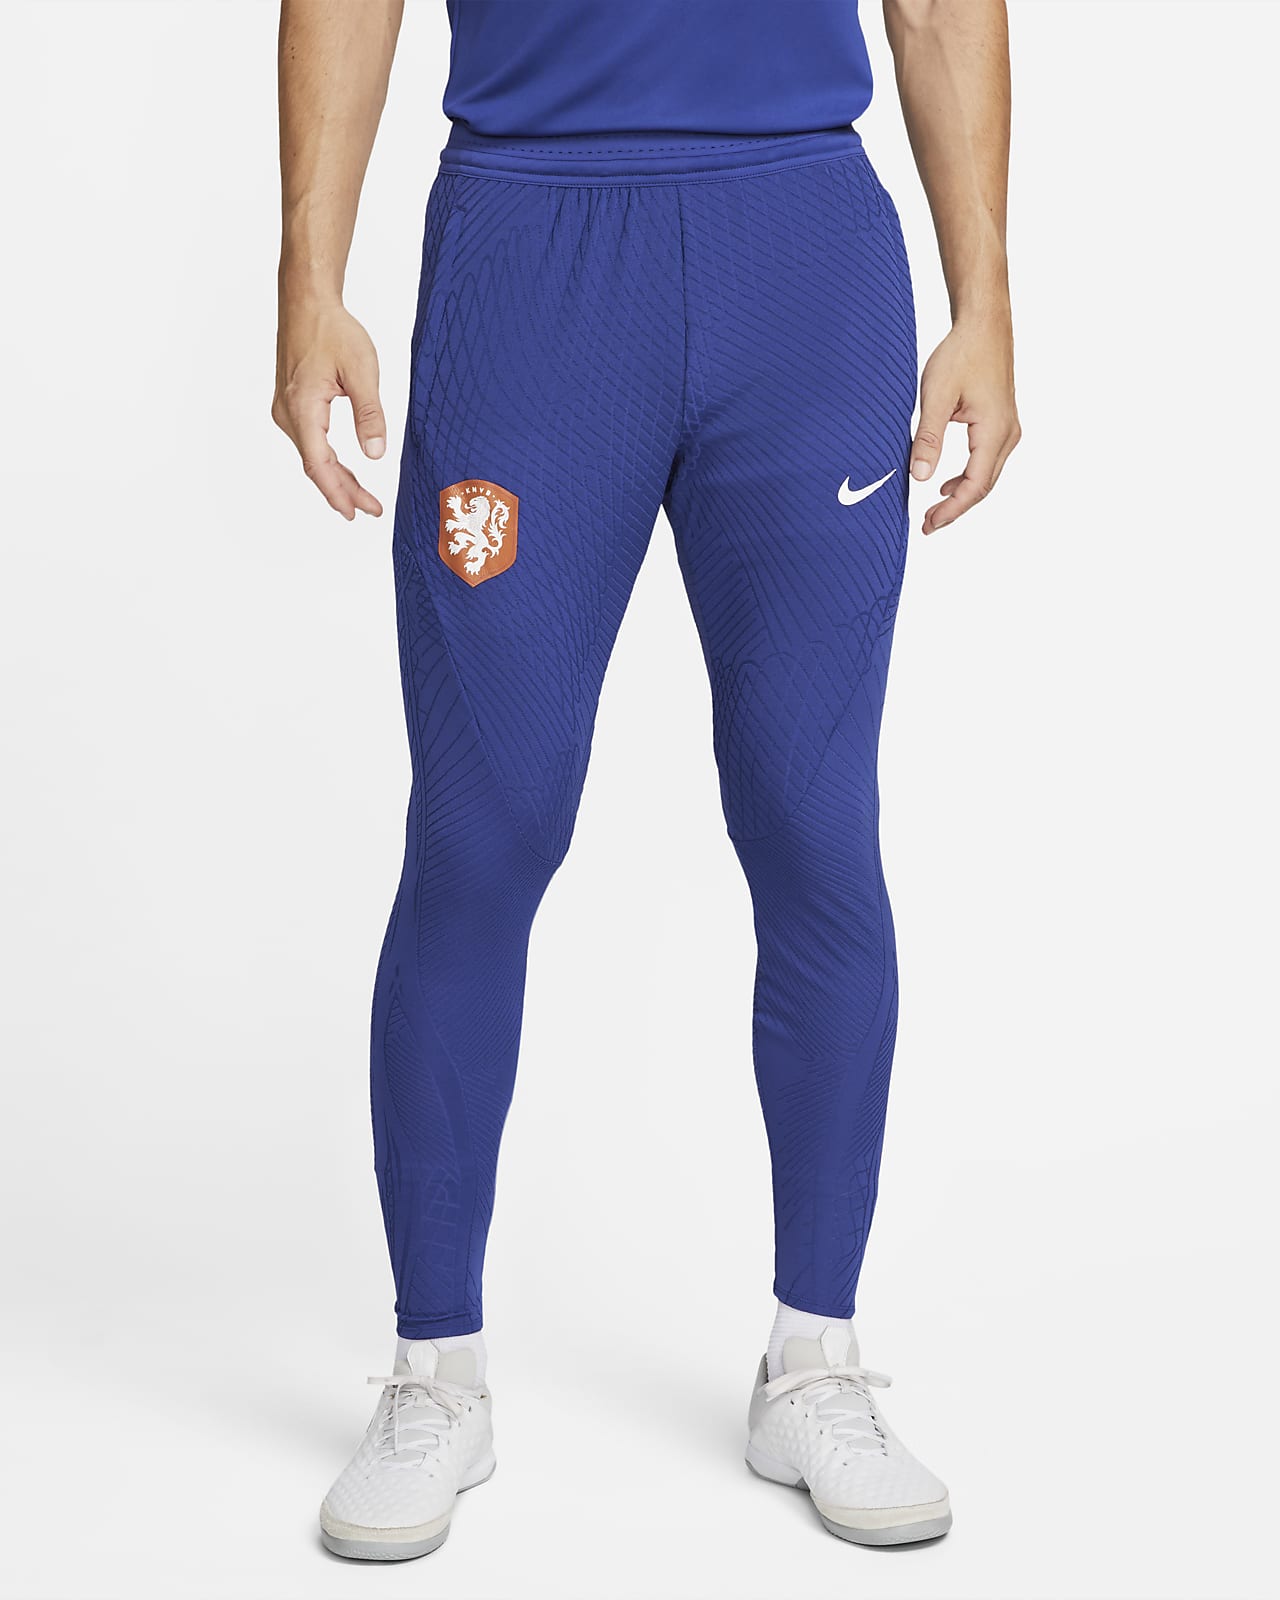 Netherlands Strike Nike Dri-FIT ADV Football Pants. LU